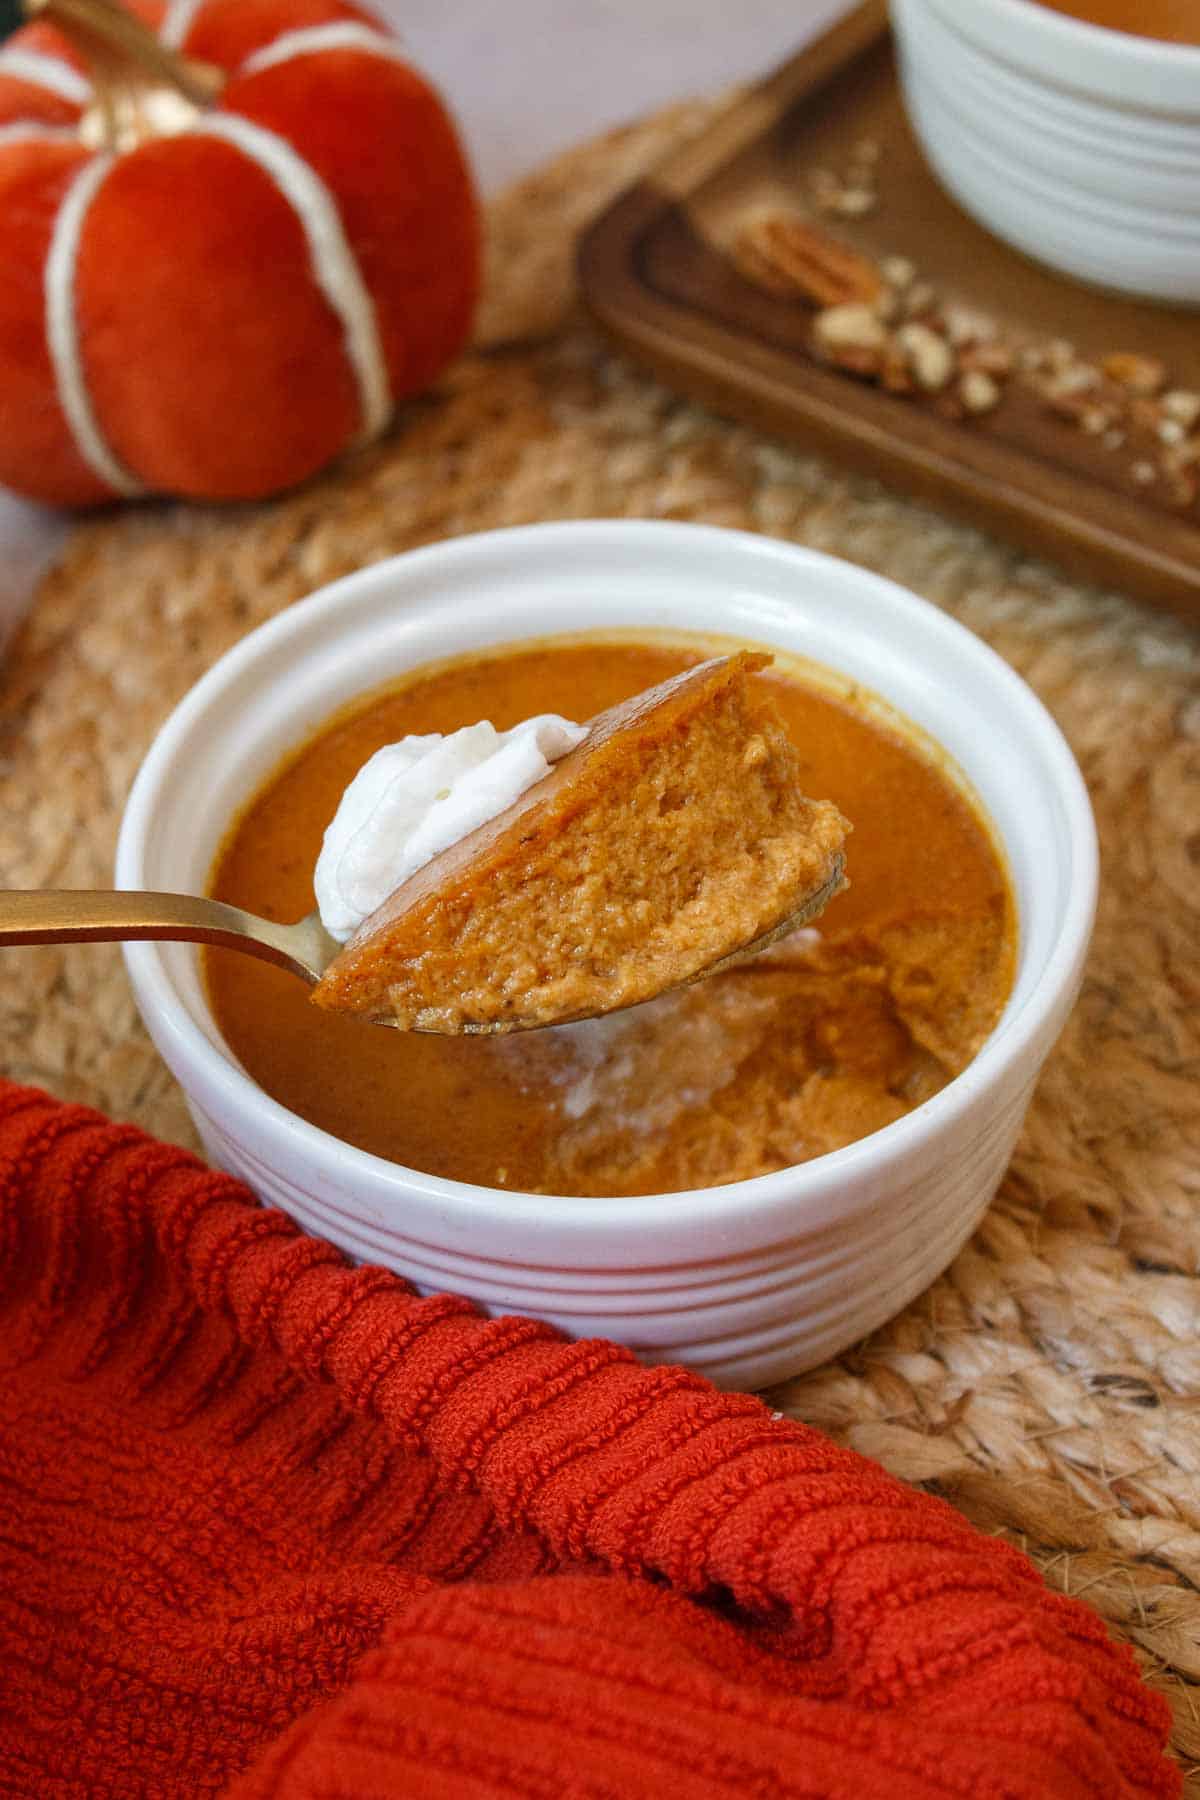 Spoonful of baked pumpkin custard shows creamy texture.